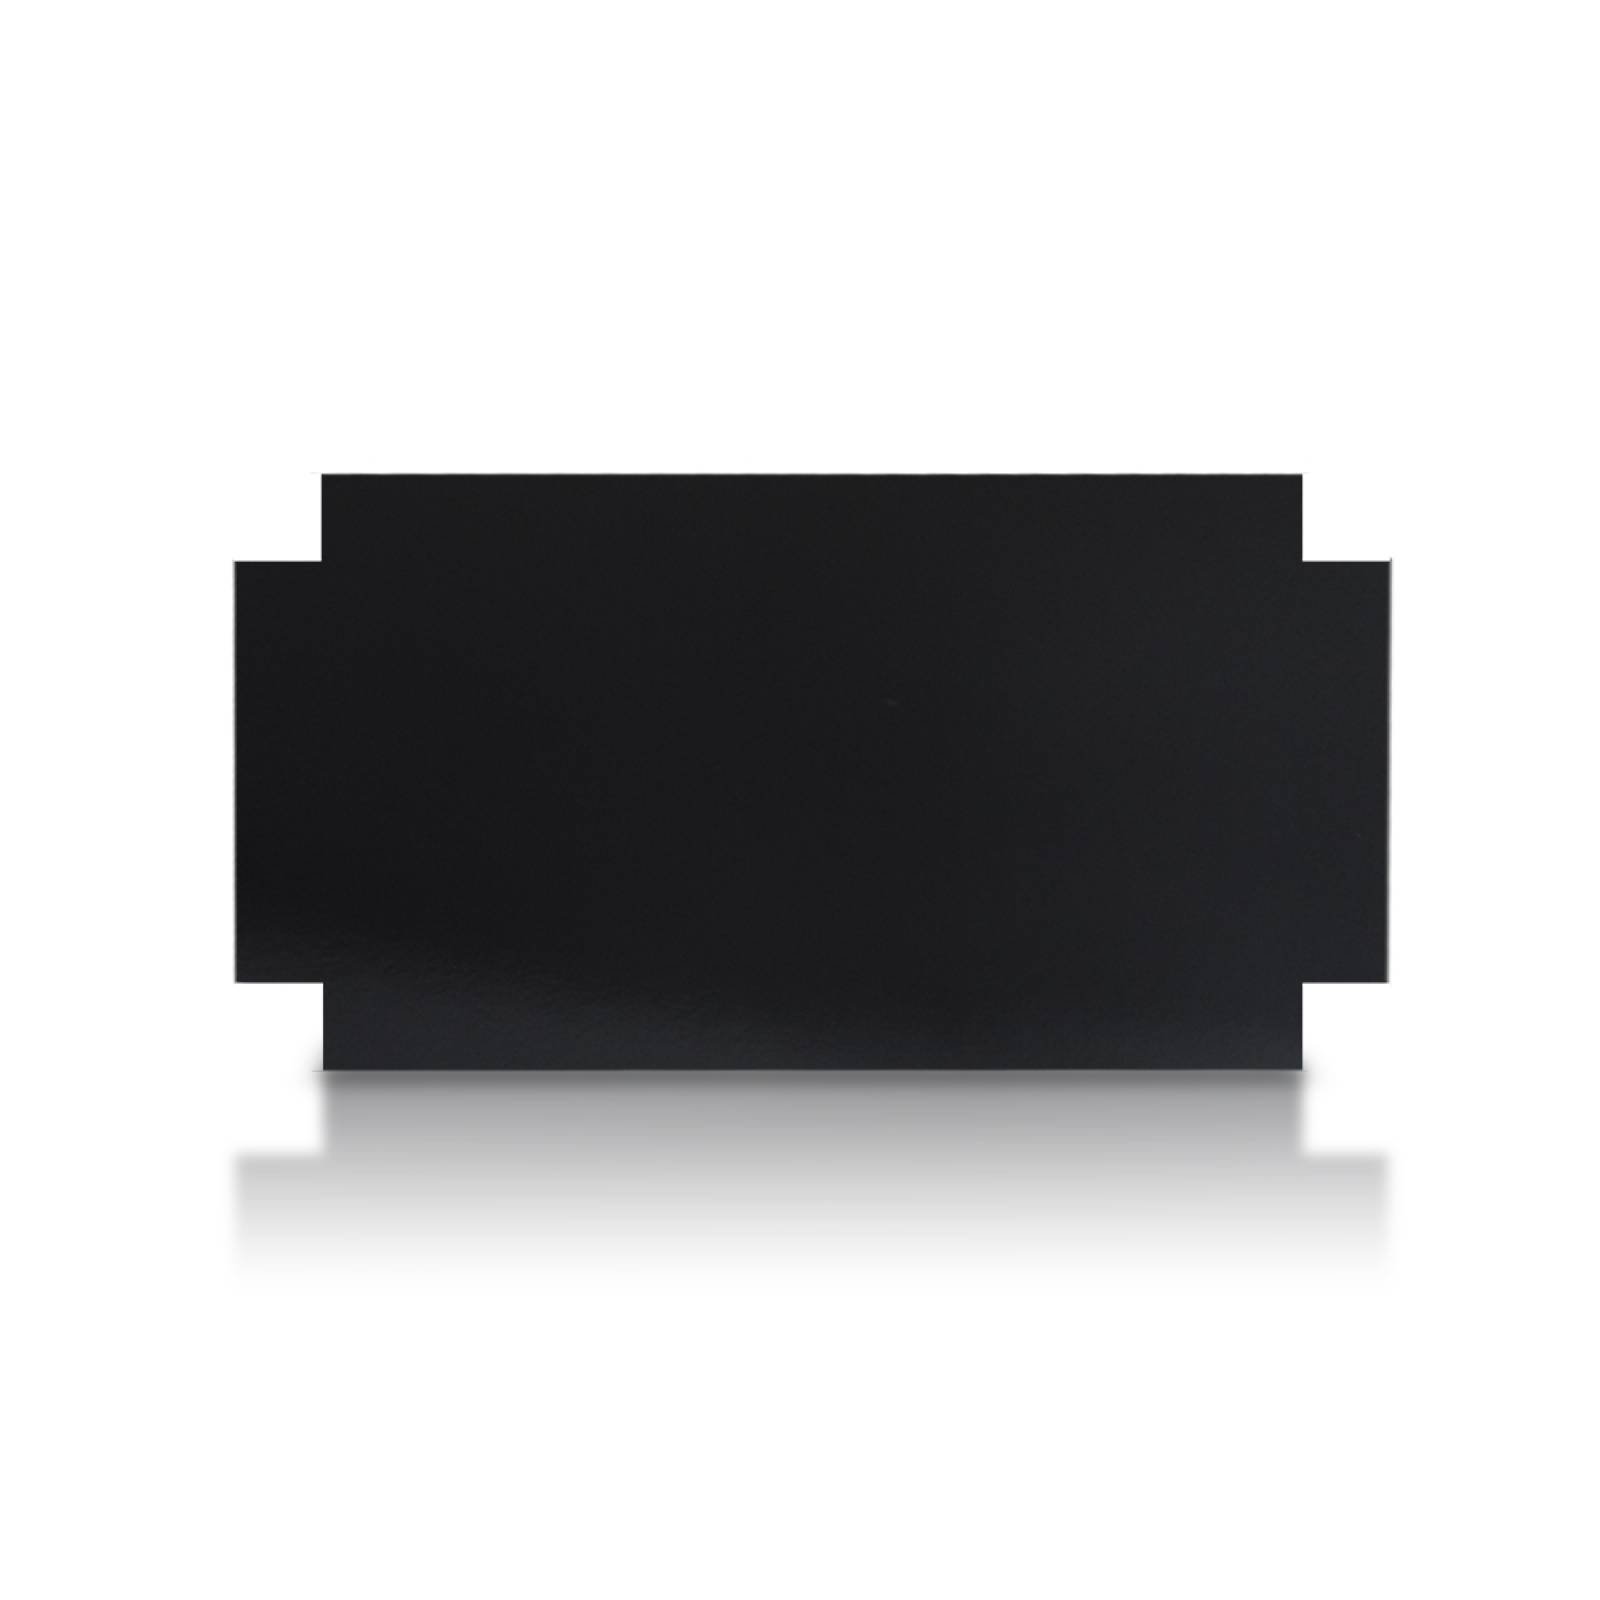 Aislante Cerámico Protector Térmico para Pared de 52 x 20 cm Negro, Mod: 3PTPNe